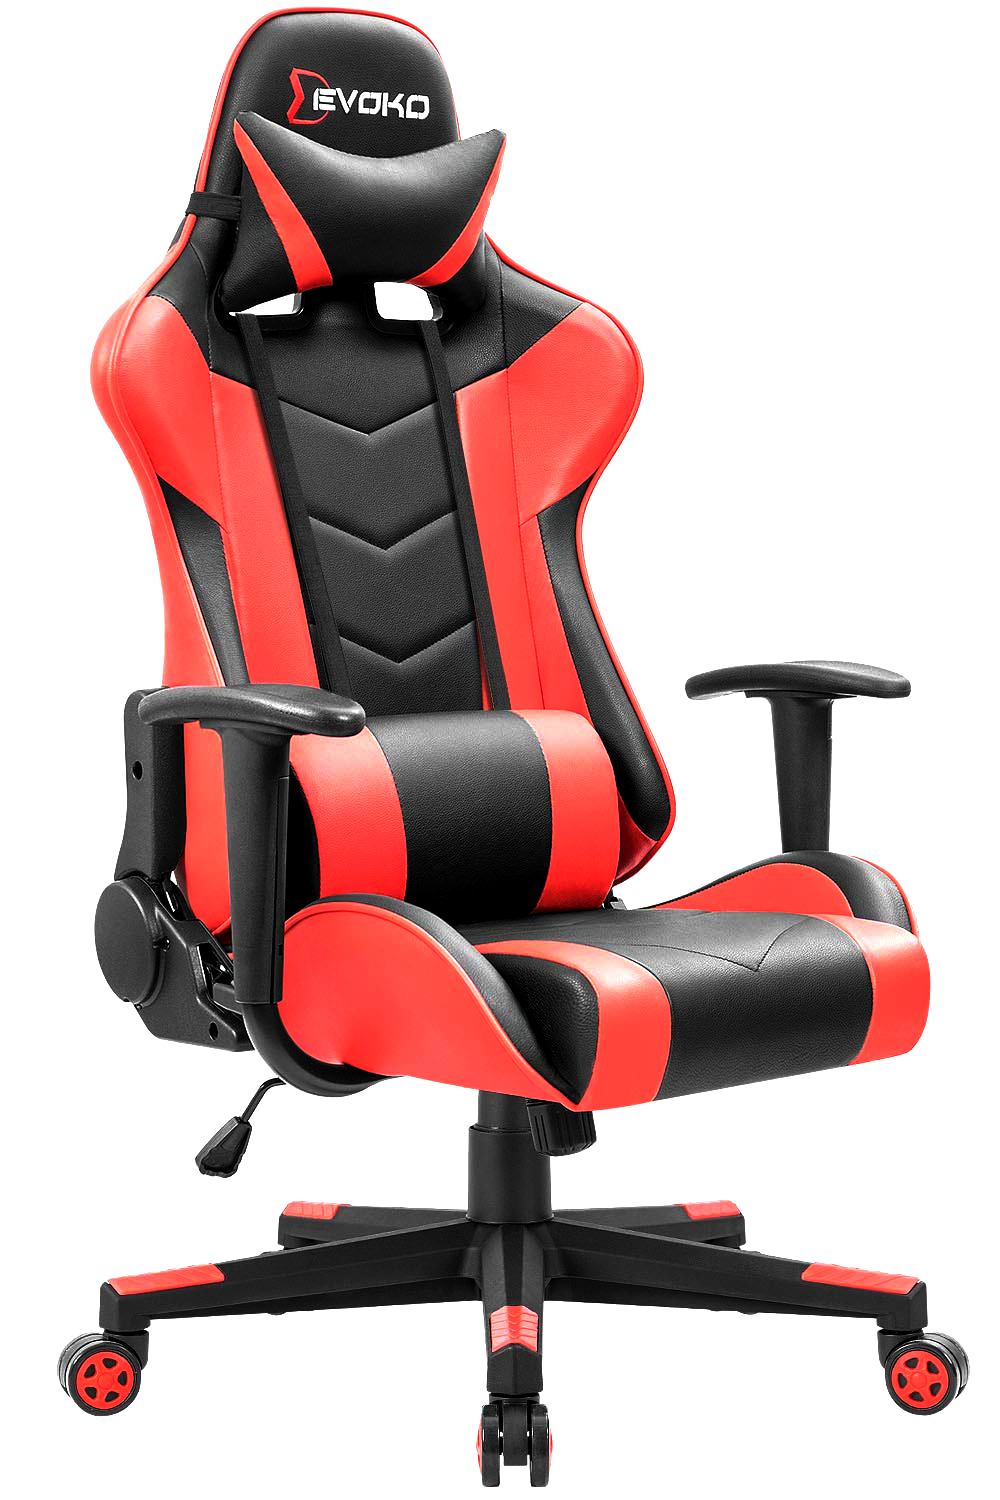 Devoko gaming Chair